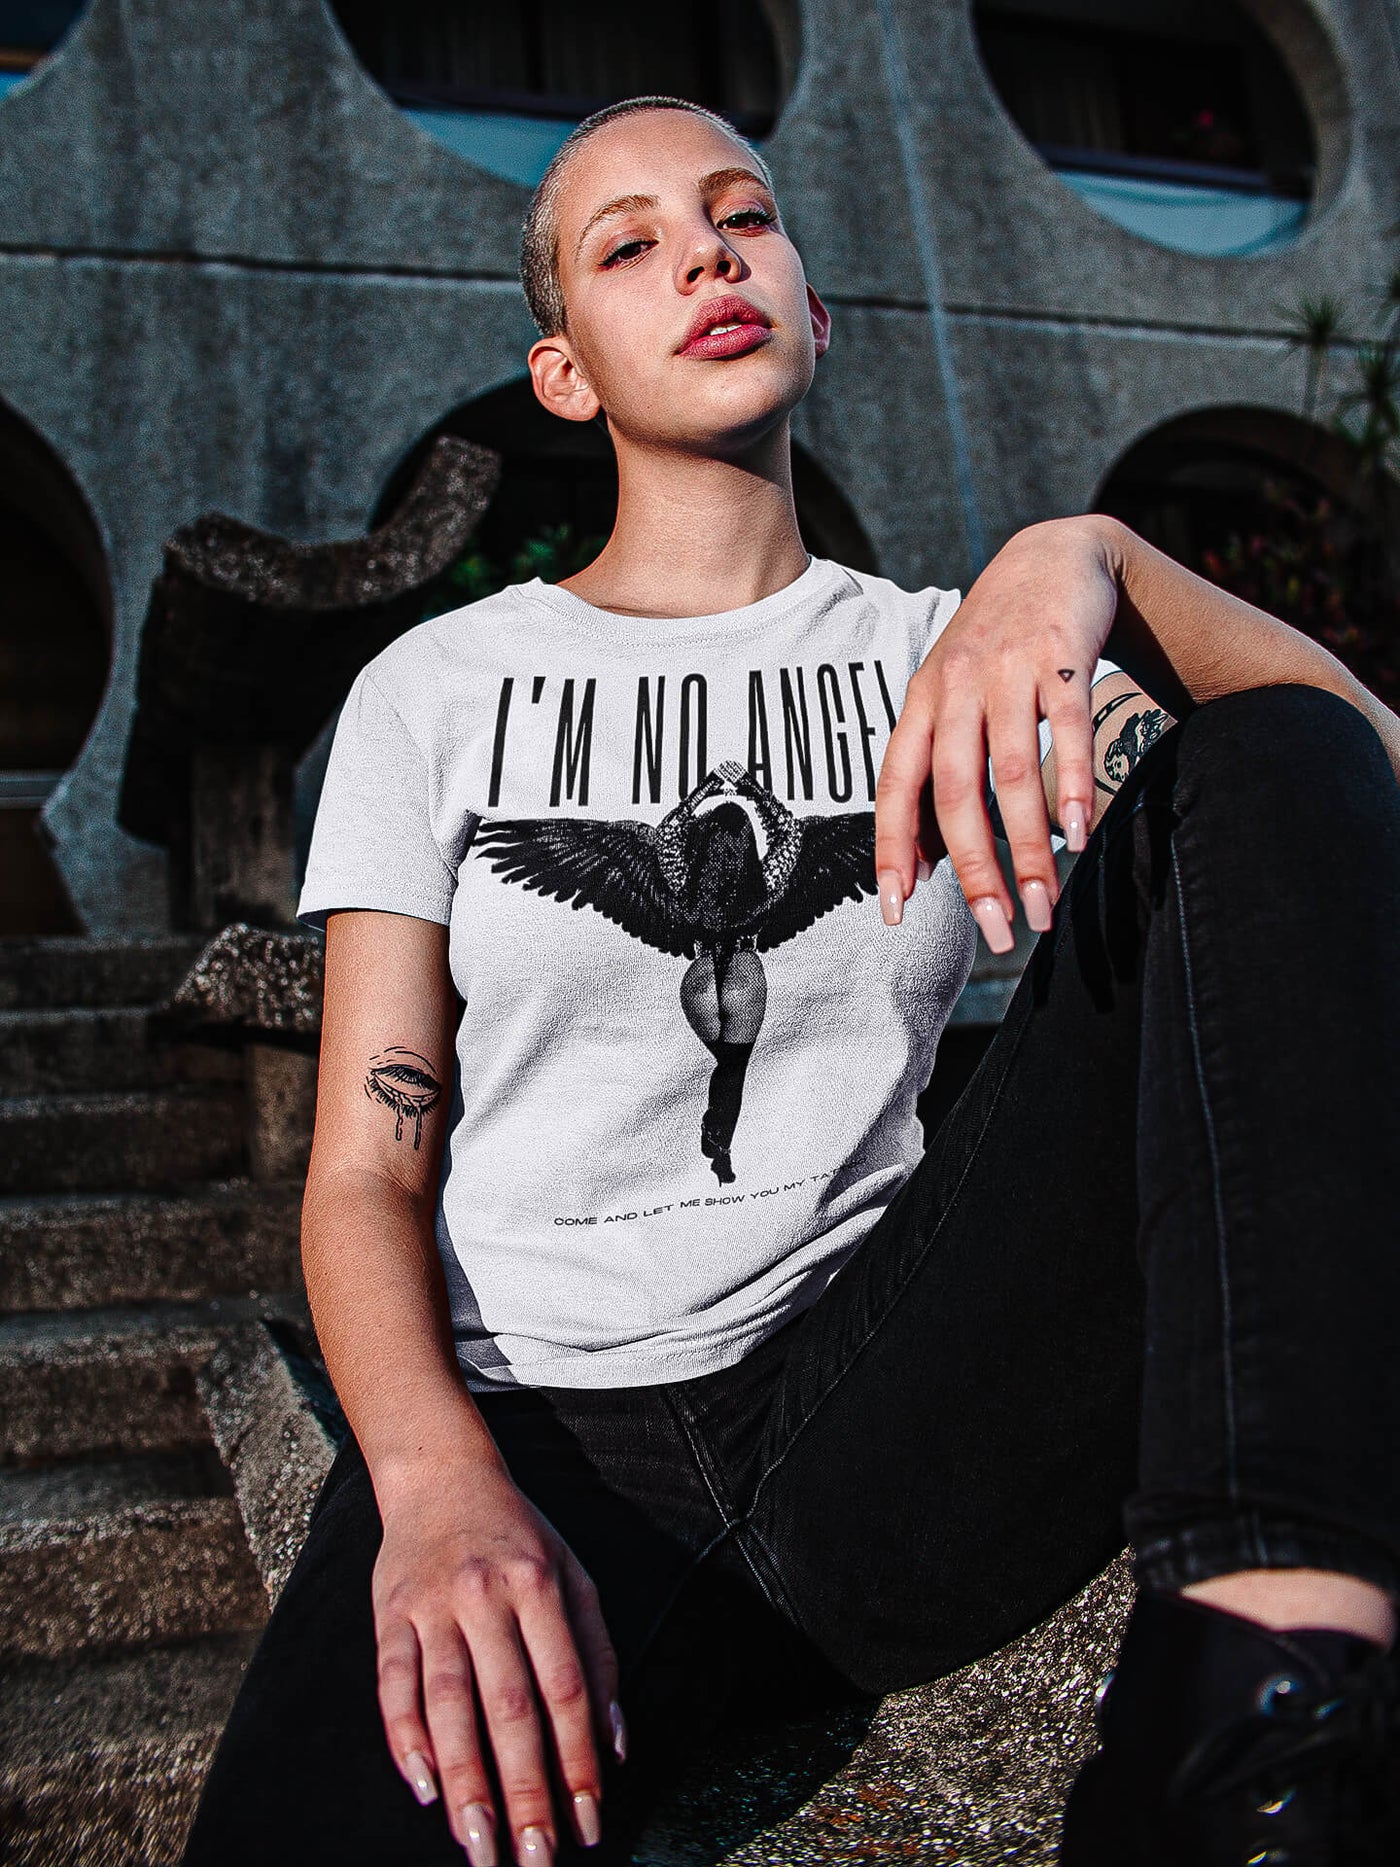 Fashion-forward girl with a buzz cut, striking a confident pose in a 'I'm No Angel Cher' T-shirt by Gllamazon, showcasing alternative beauty.